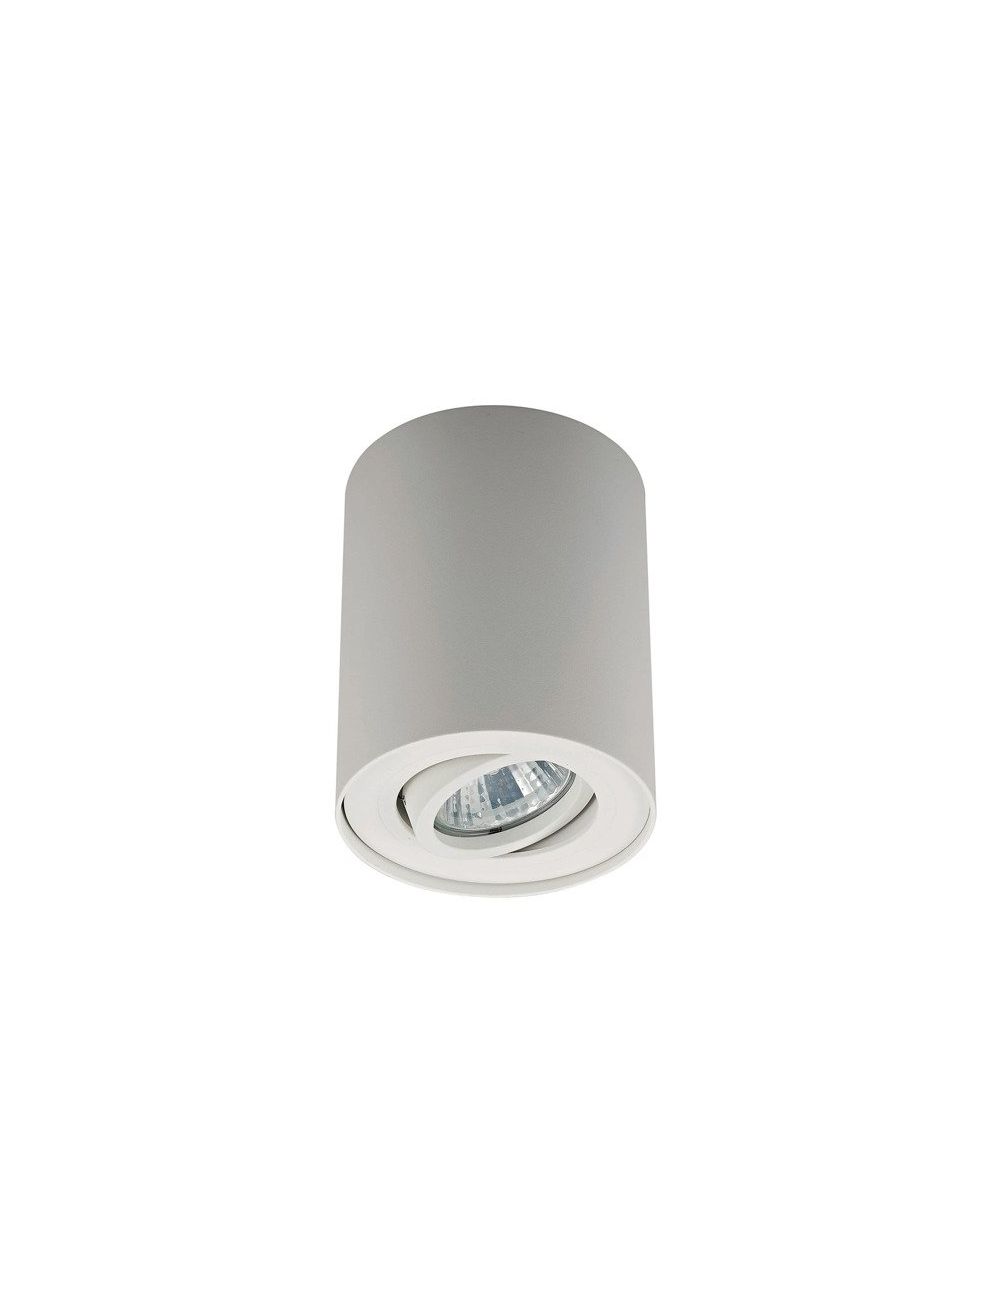 Lampa sufitowa tuba natynkowa spot Rondoc Zuma-line biała 20038-WH